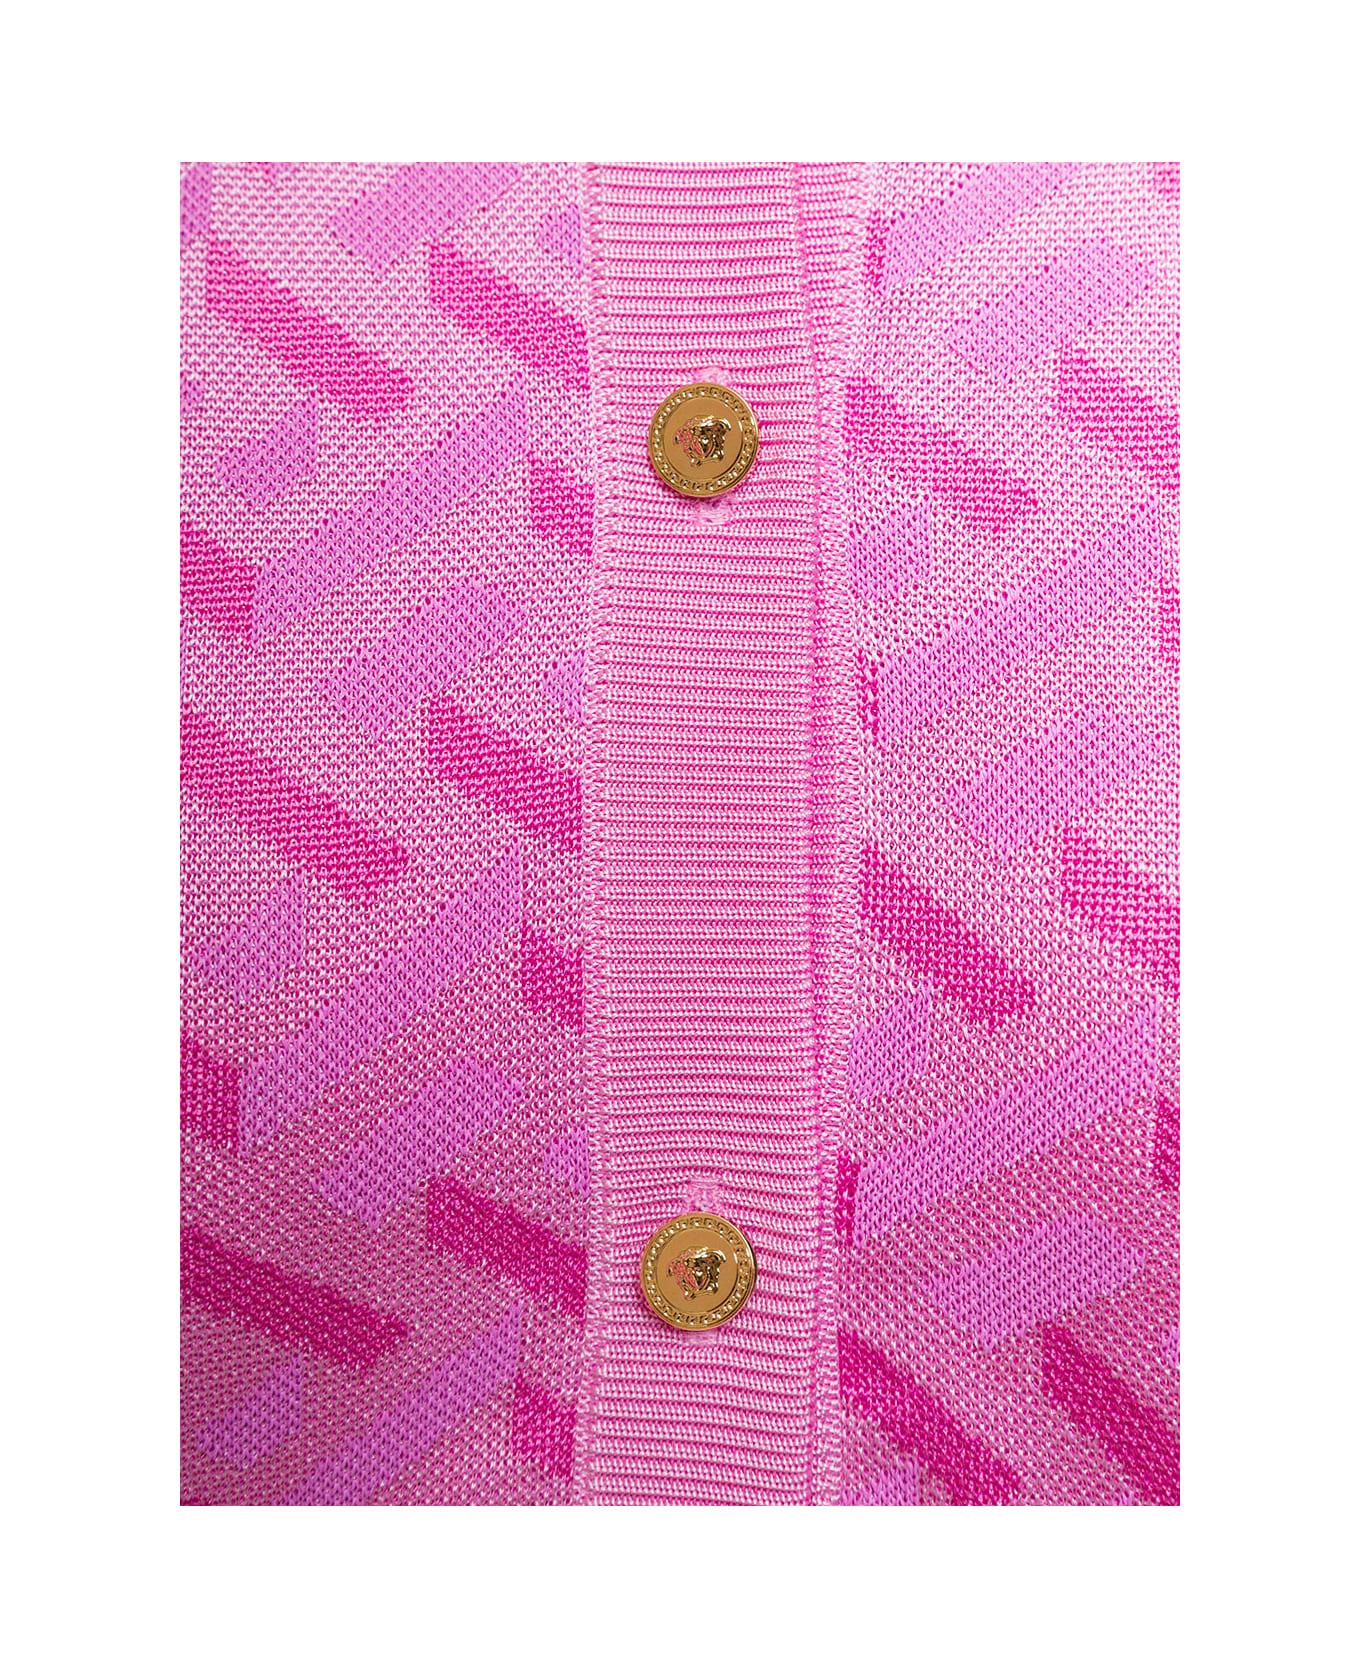 Versace Pink La Greca Monogram Cardigan In Silk Blend Woman - Pink